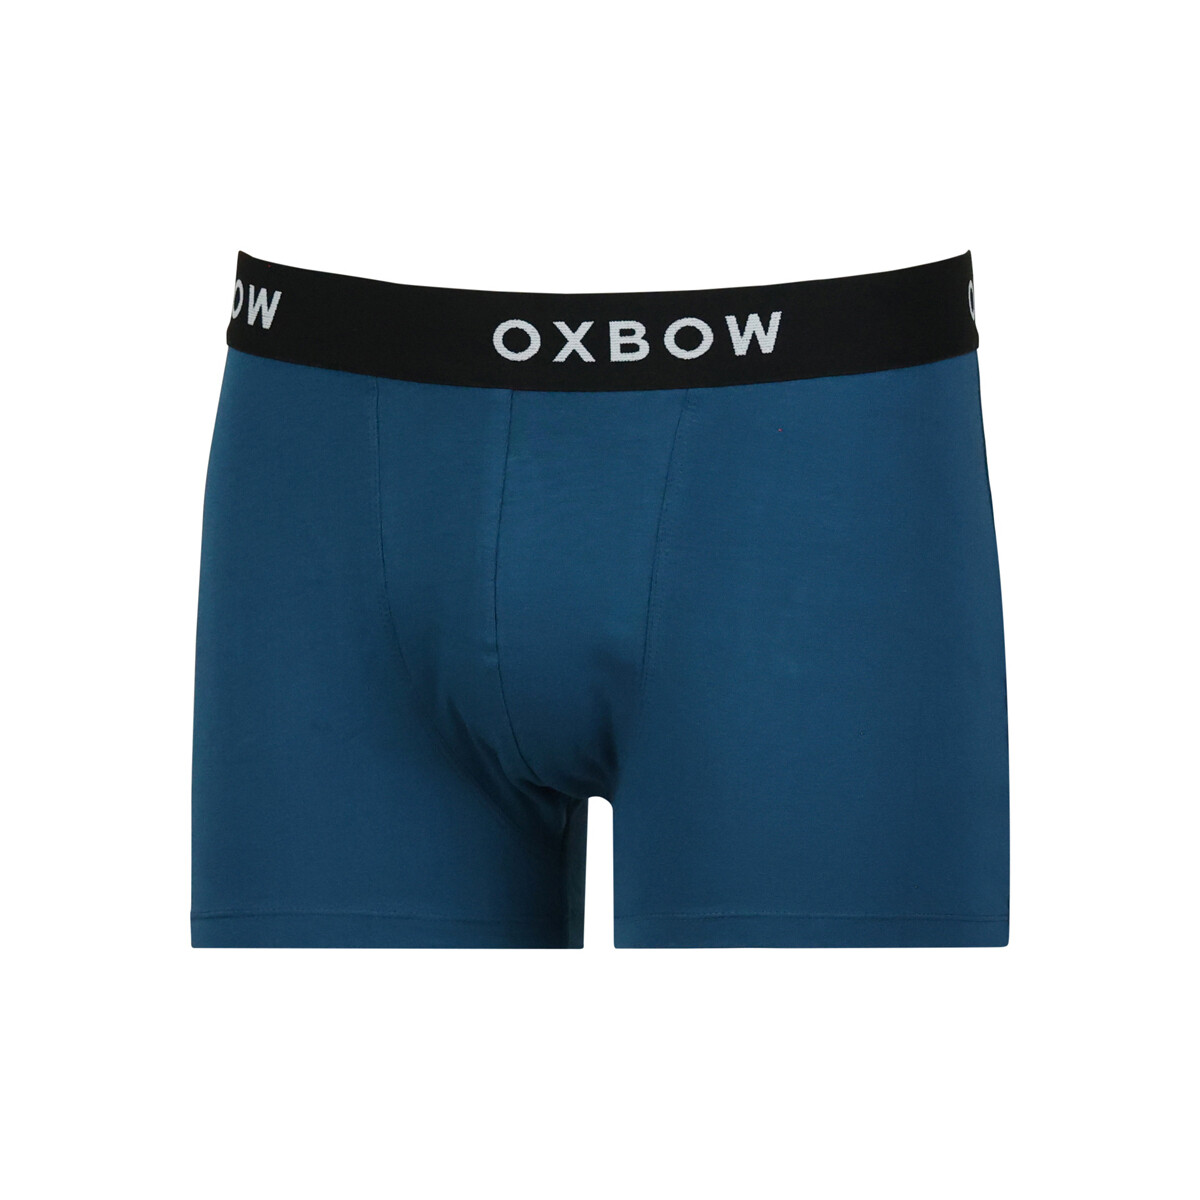 Oxbow Bleu Pack boxers BACALAR HwE3dM0s